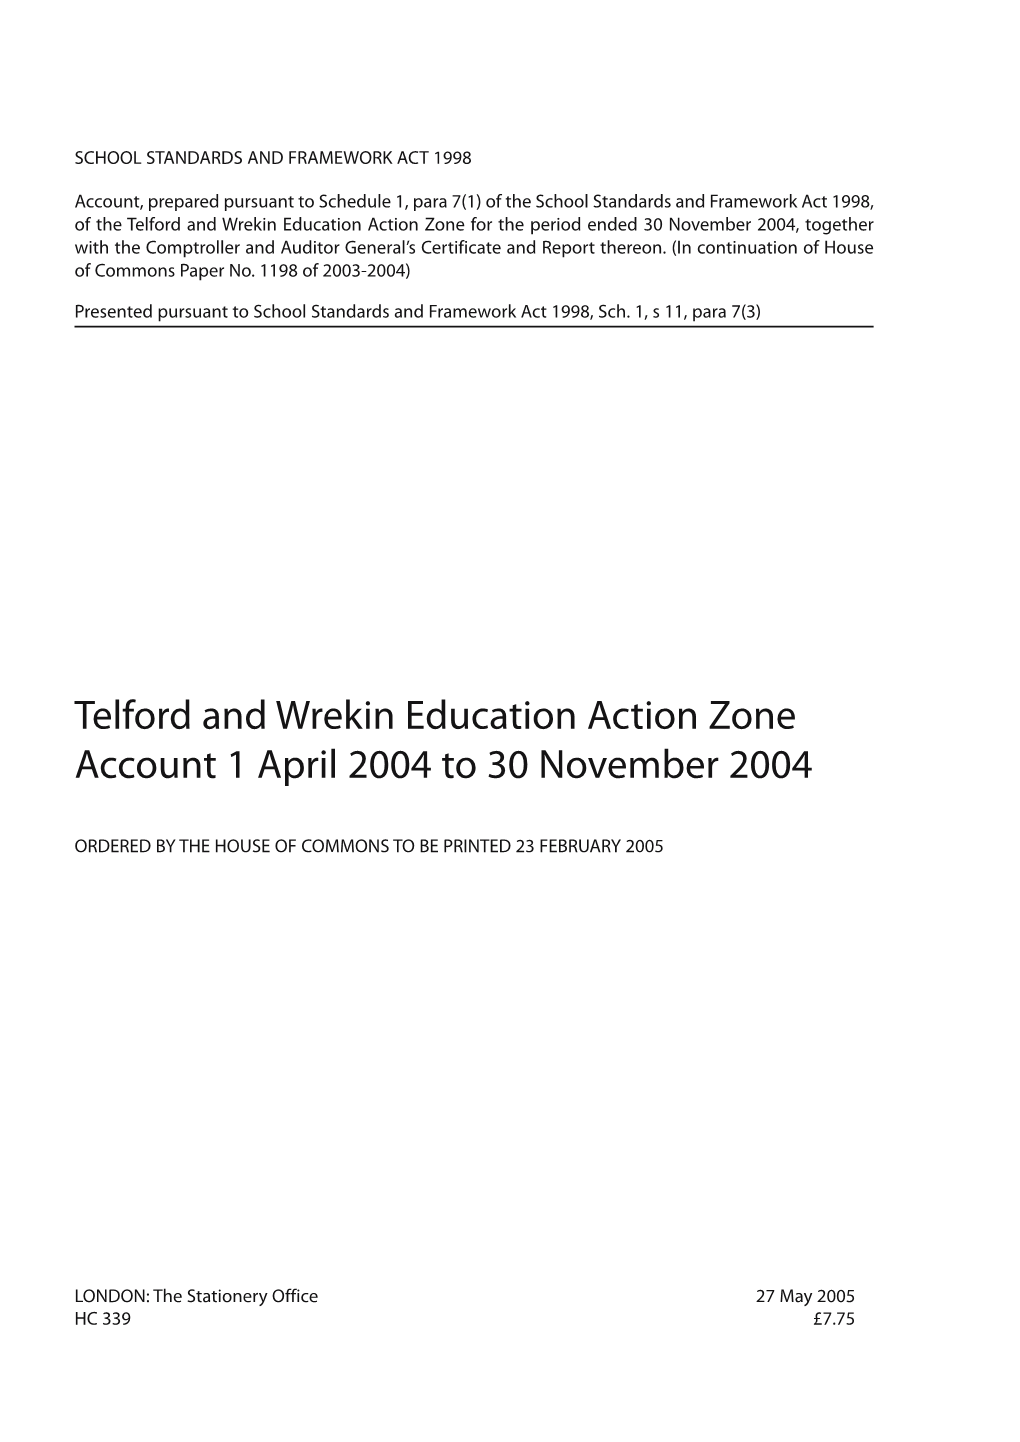 Telford and Wrekin Education Action Zone Account 1 April 2004 to 30 November 2004